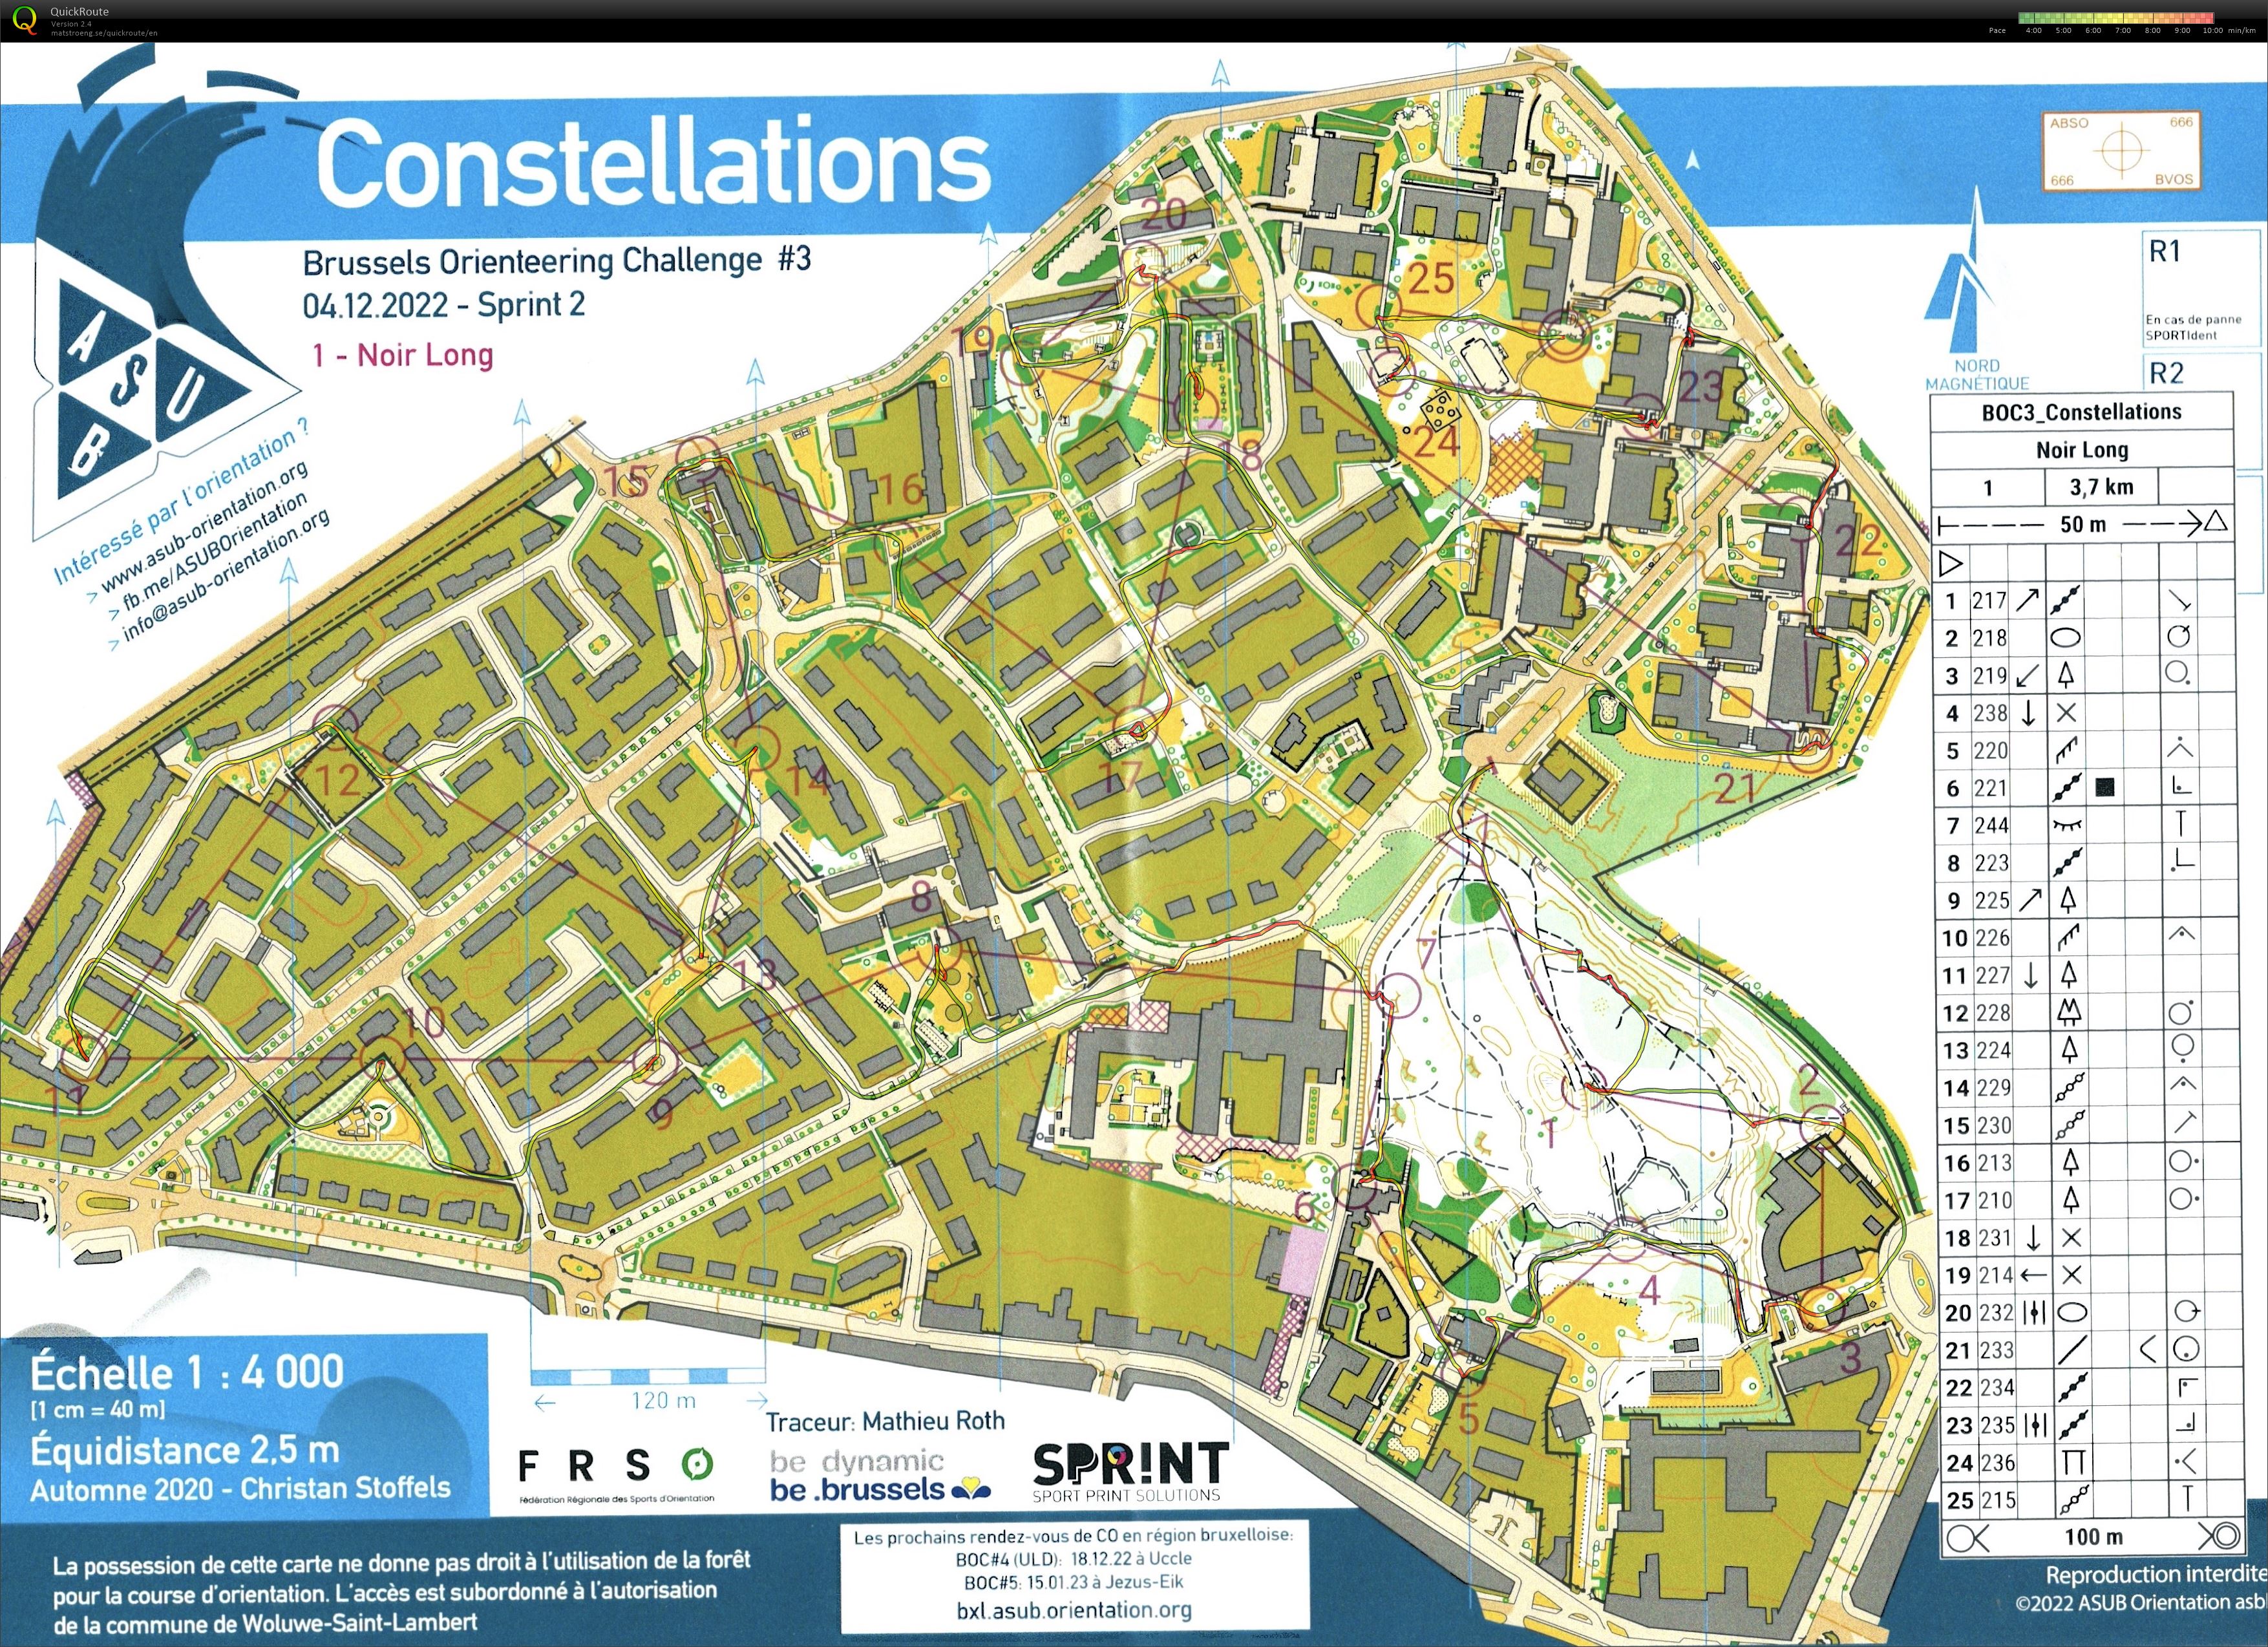 Brussels Orienteering Challenge #3 - Sprint 2 - Constellations (04/12/2022)